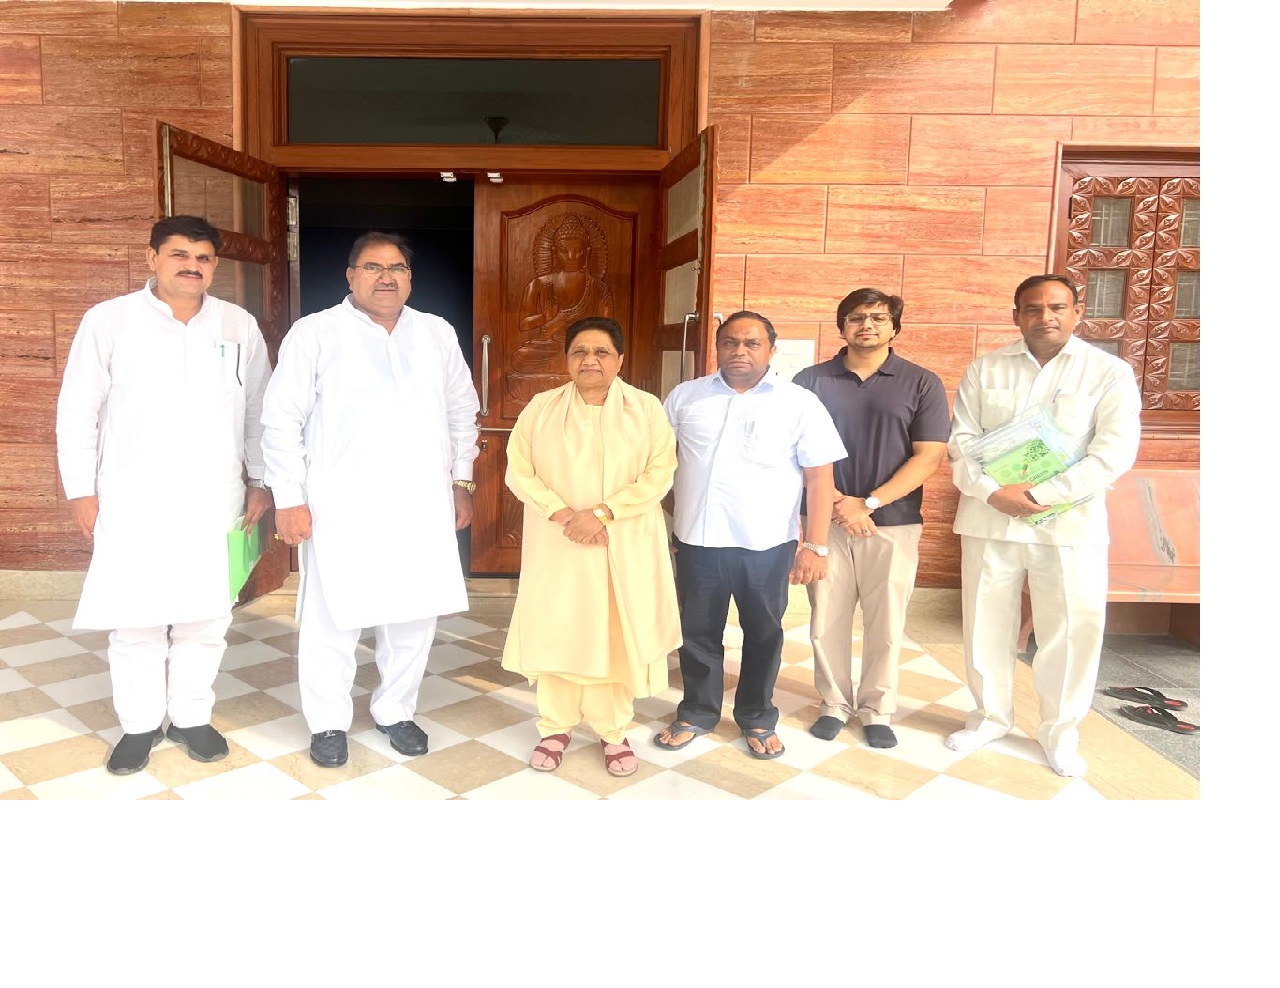 Abhay Singh Chautala Meet Mayawati: ابھے سنگھ چوٹالہ کی مایاوتی سے ملاقات، کیا ہریانہ اسمبلی انتخابات میں ہوگا اتحاد؟